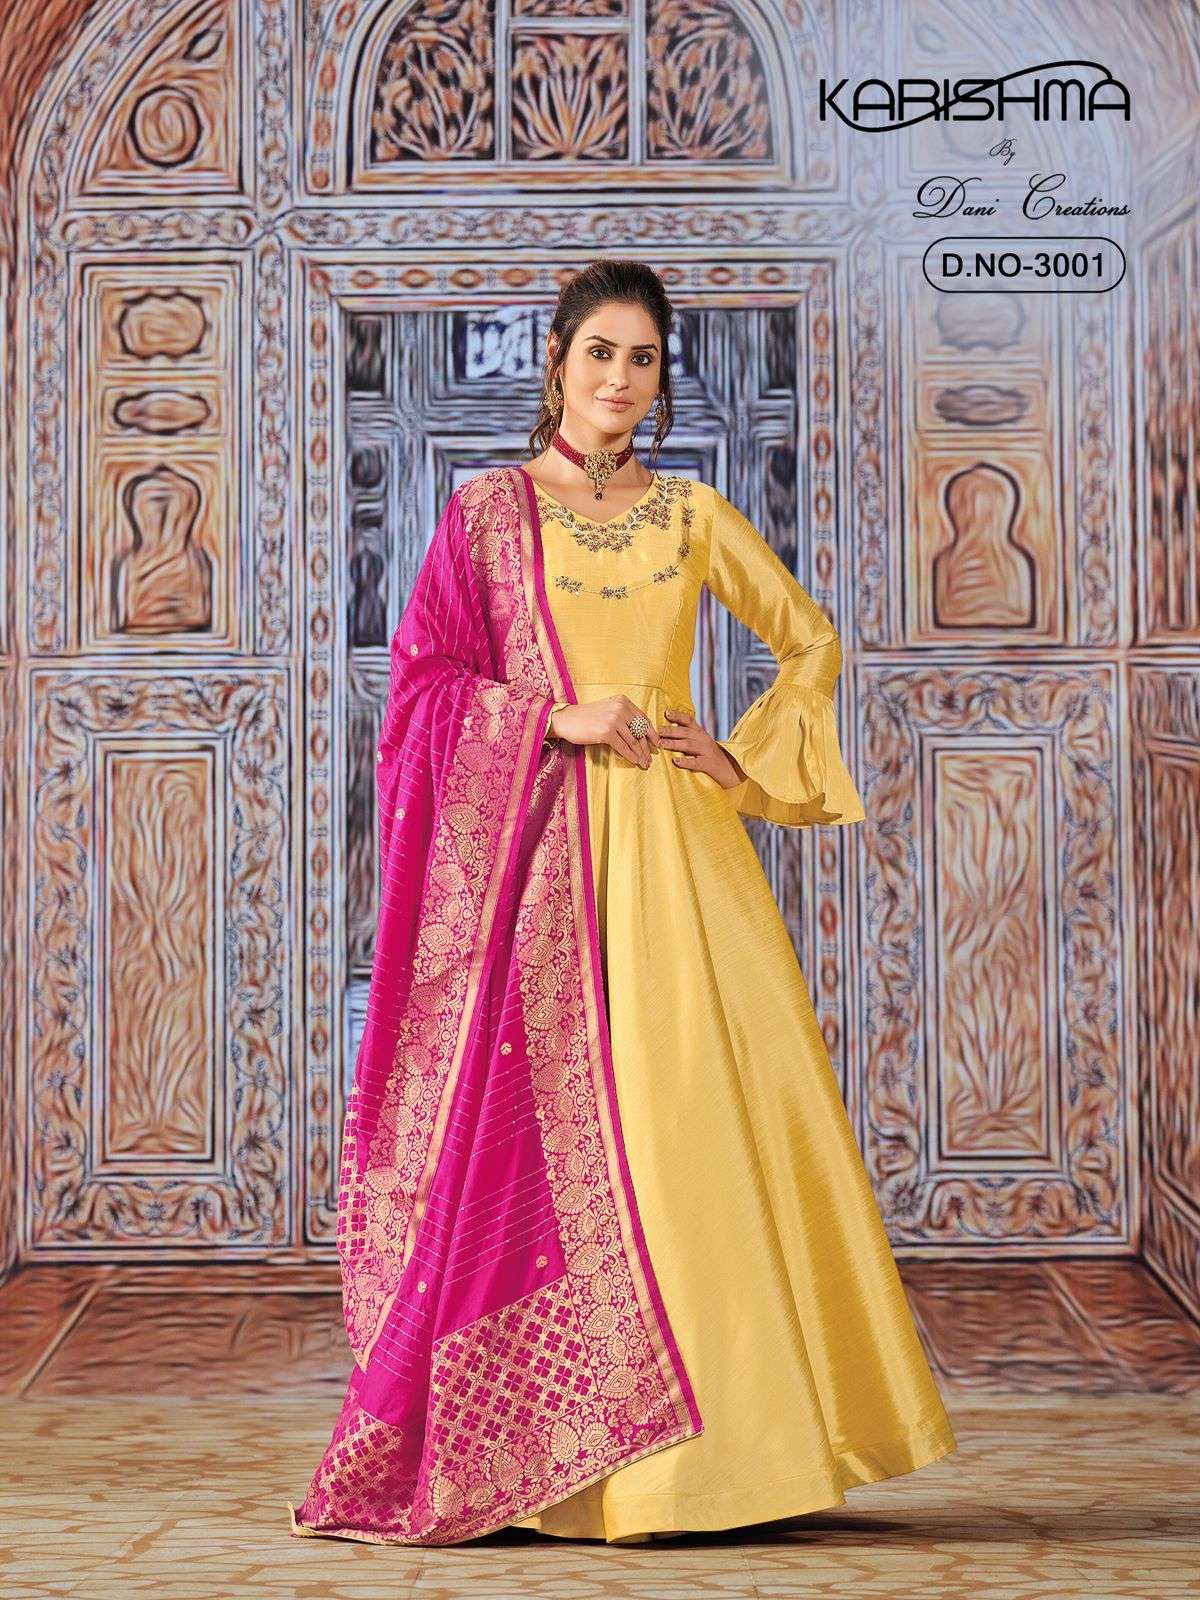 daani creation karishma 3001-3004 series party wear designer gown with dupatta wholesale price surat